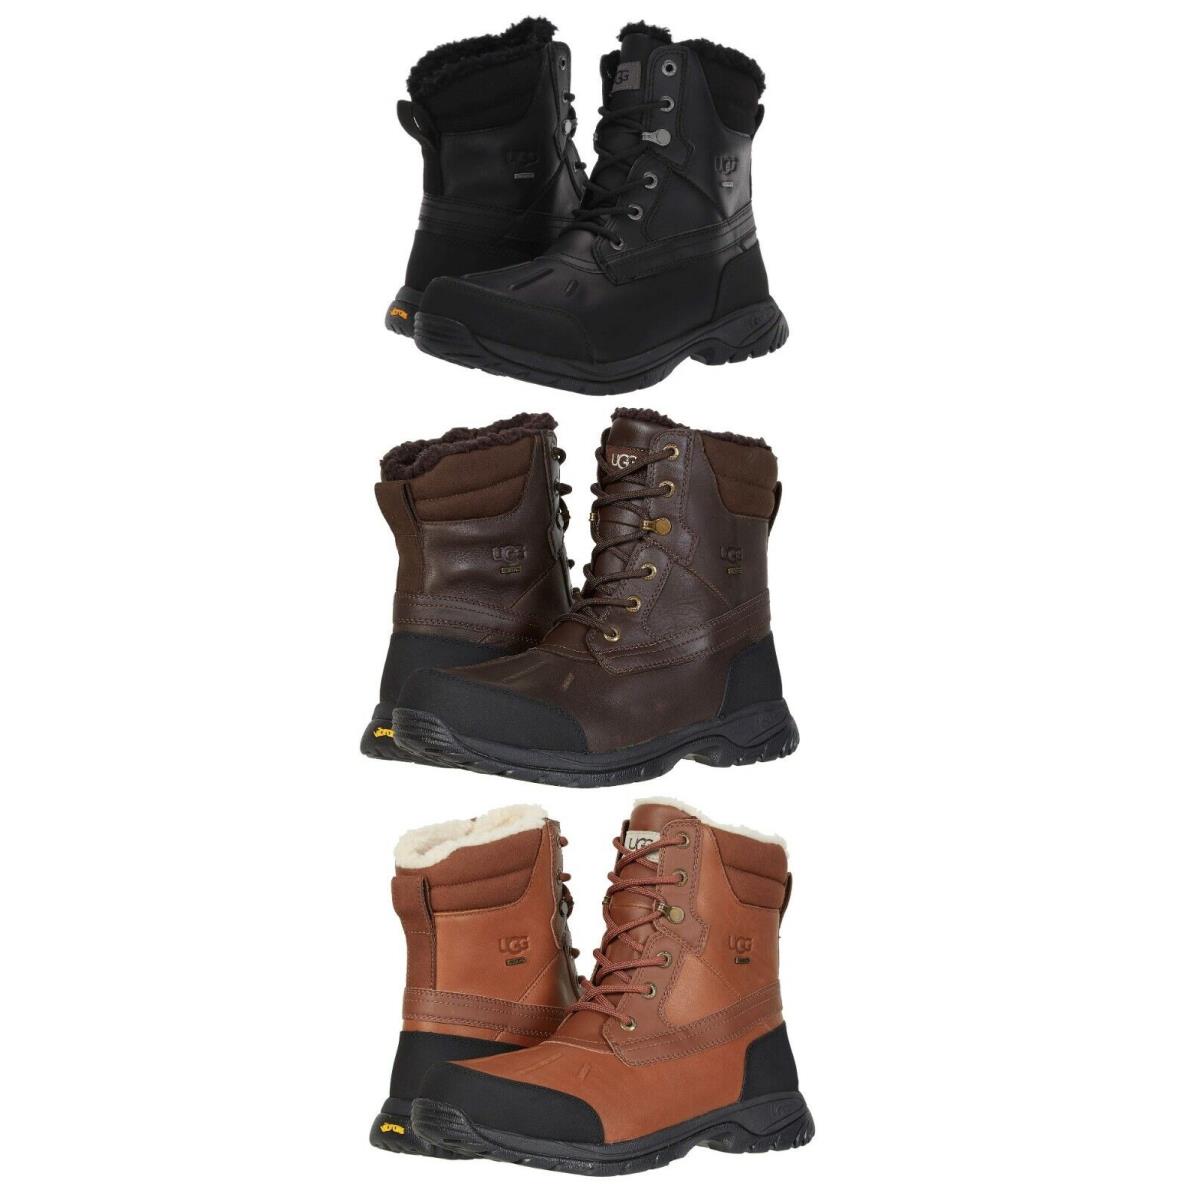 Ugg Men`s Felton Waterproof Leather Boots Casual Fashion Shoes Black Chestnut - Black